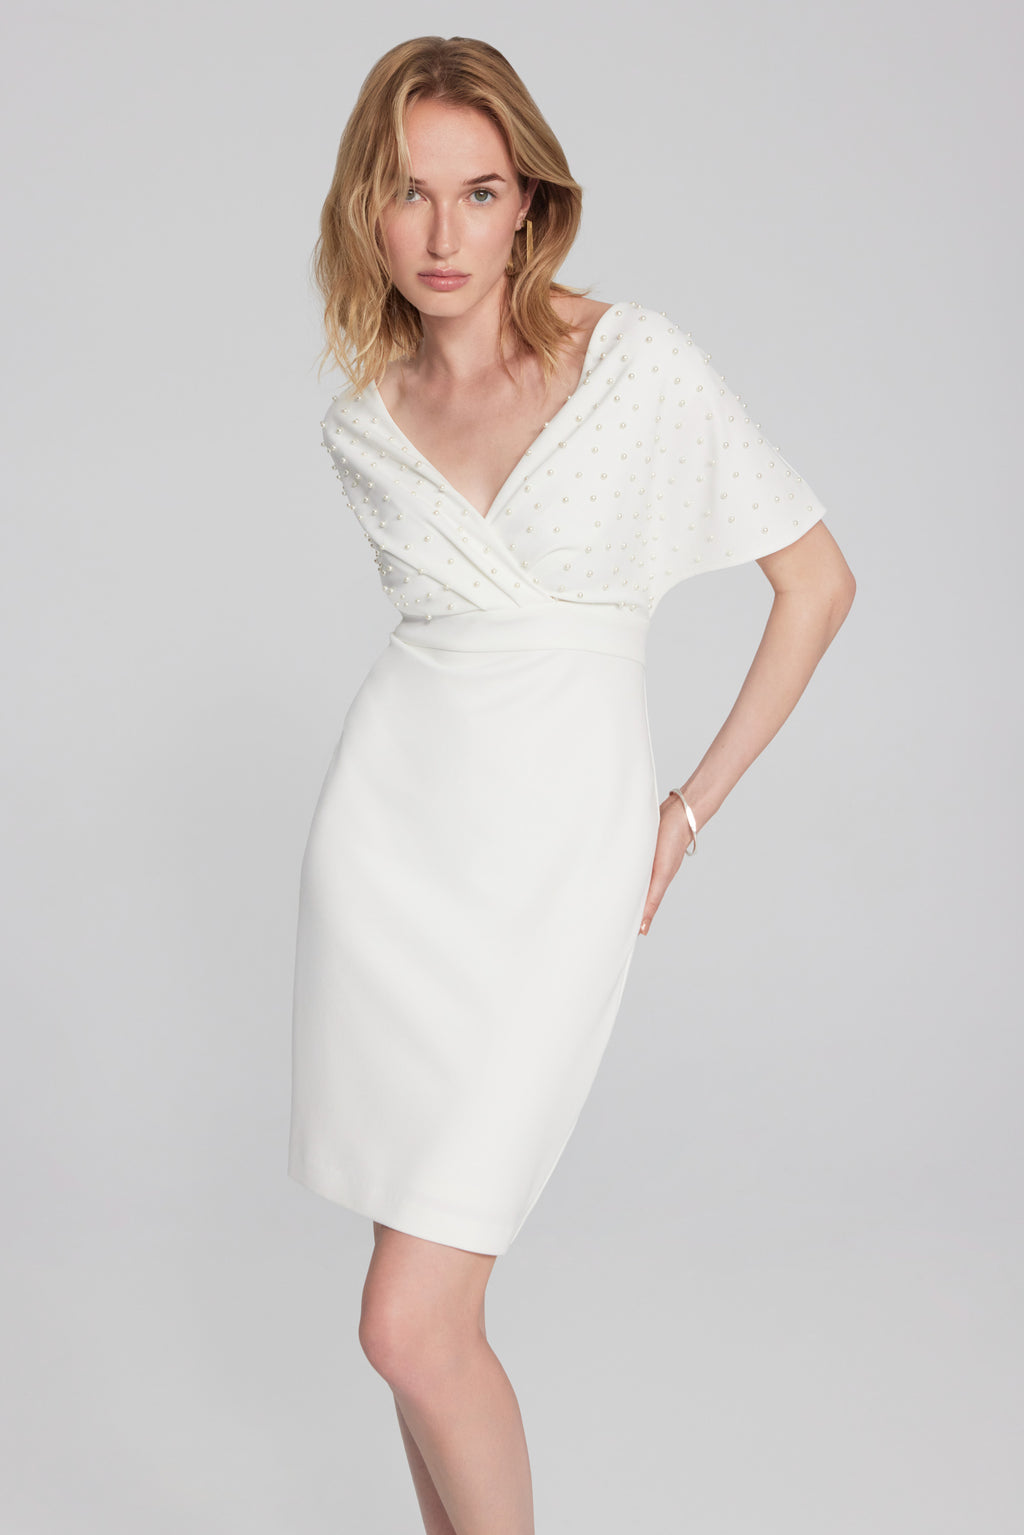 Joseph Ribkoff Vanilla Wrap Dress with Pearl Detail Style 241761